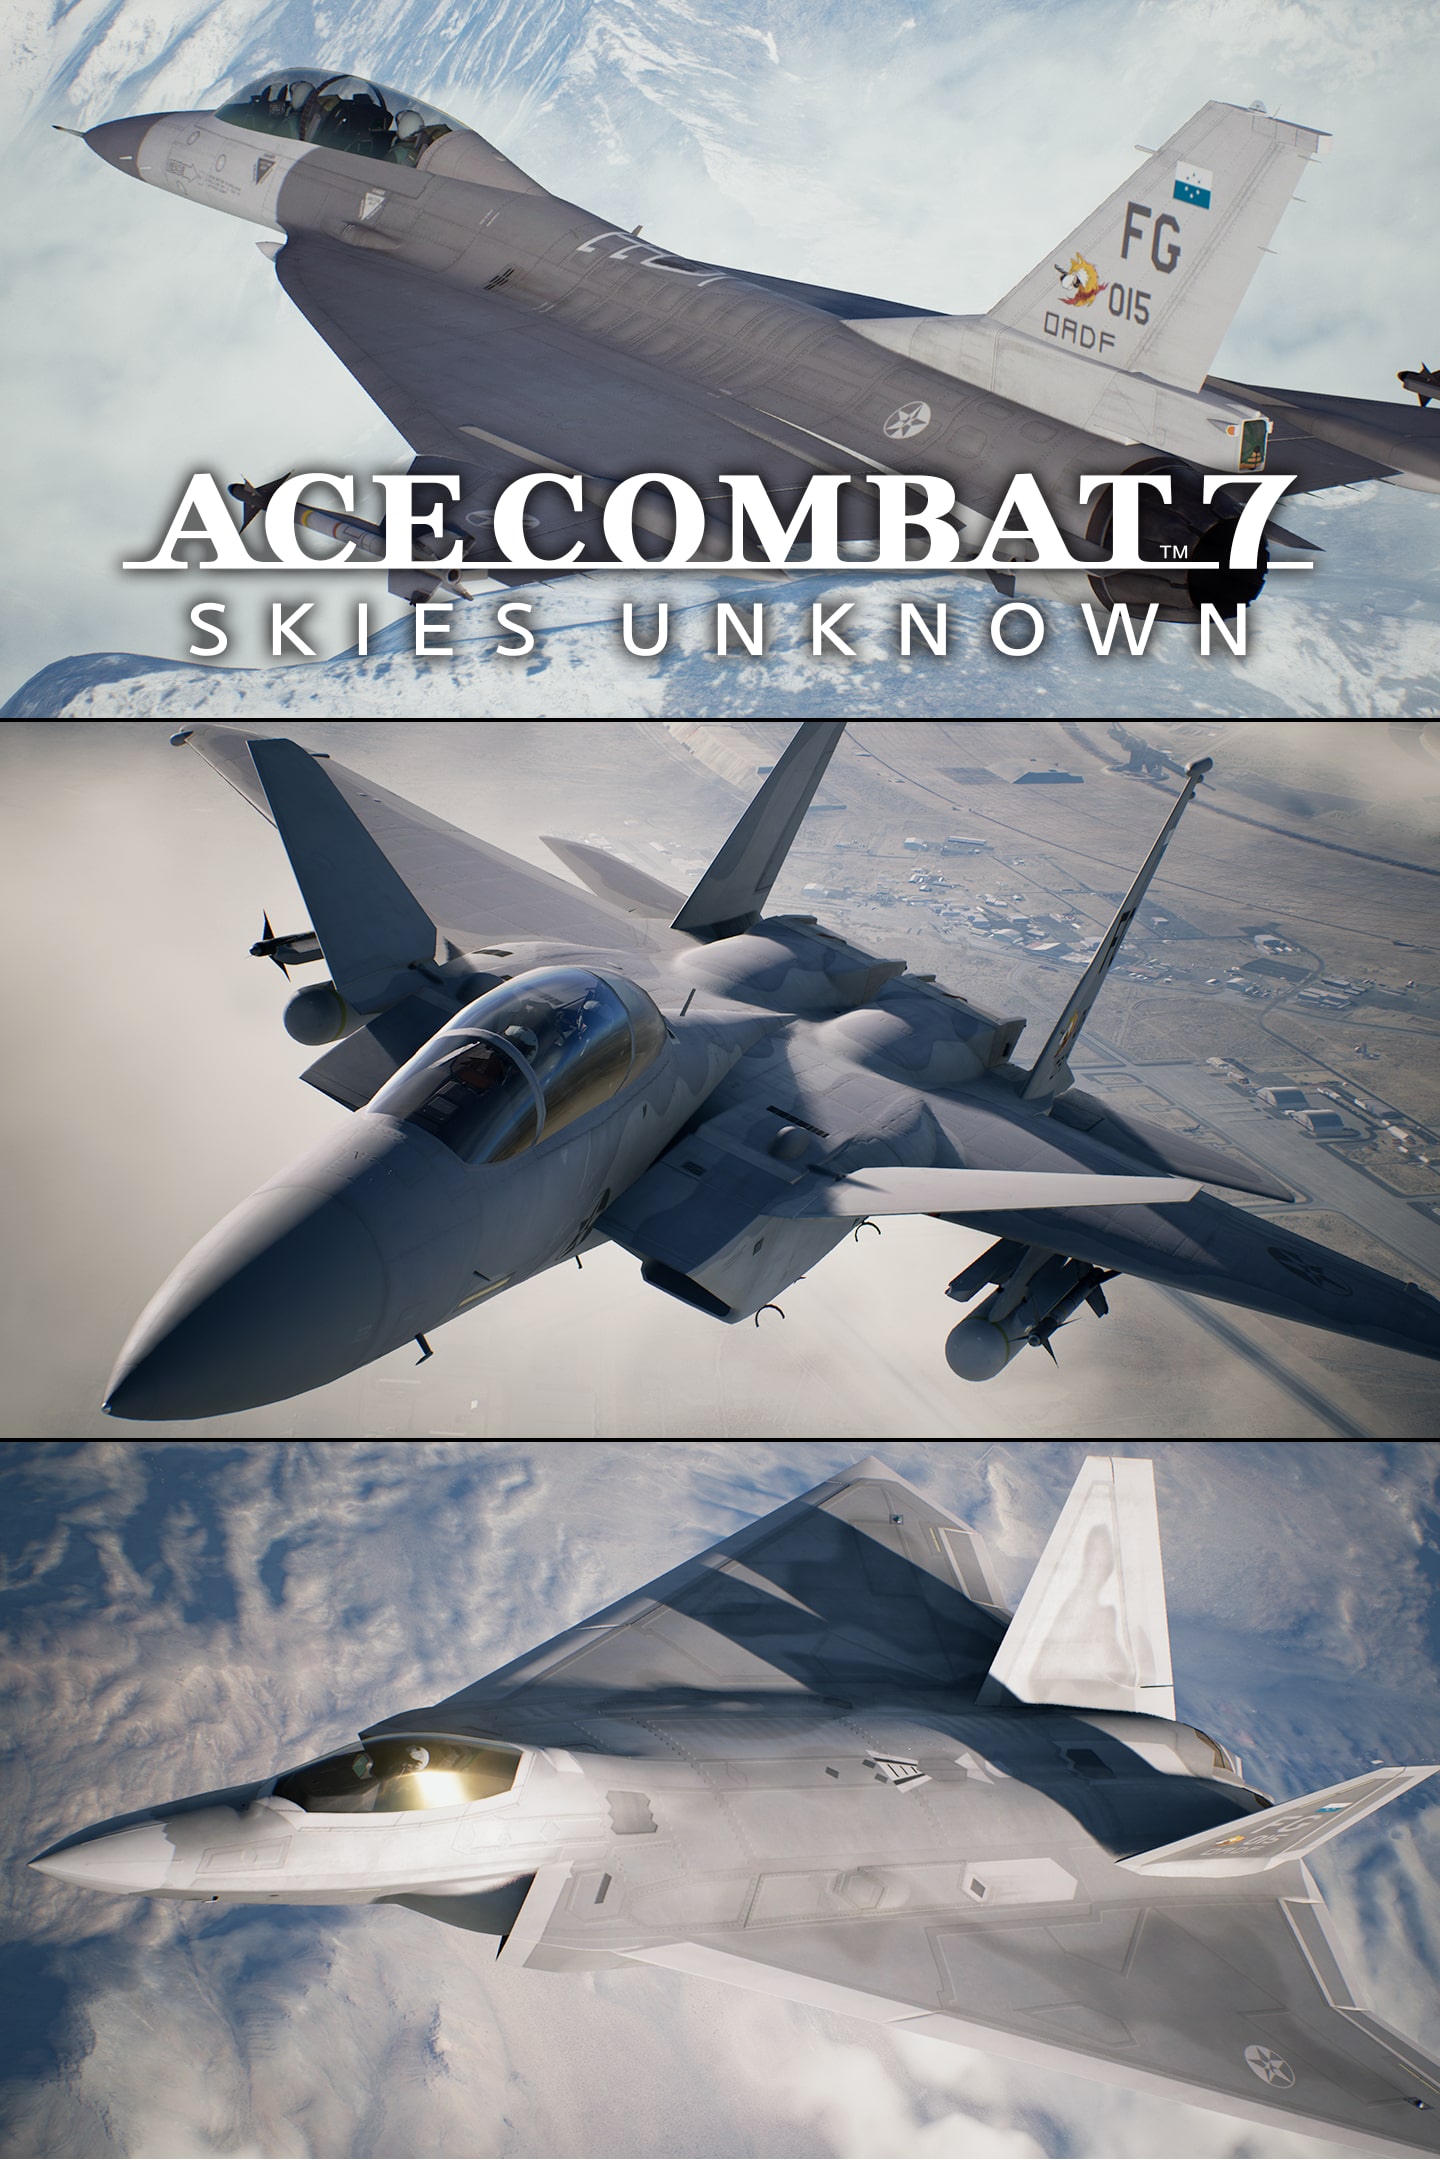 ace combat 7 aircraft list